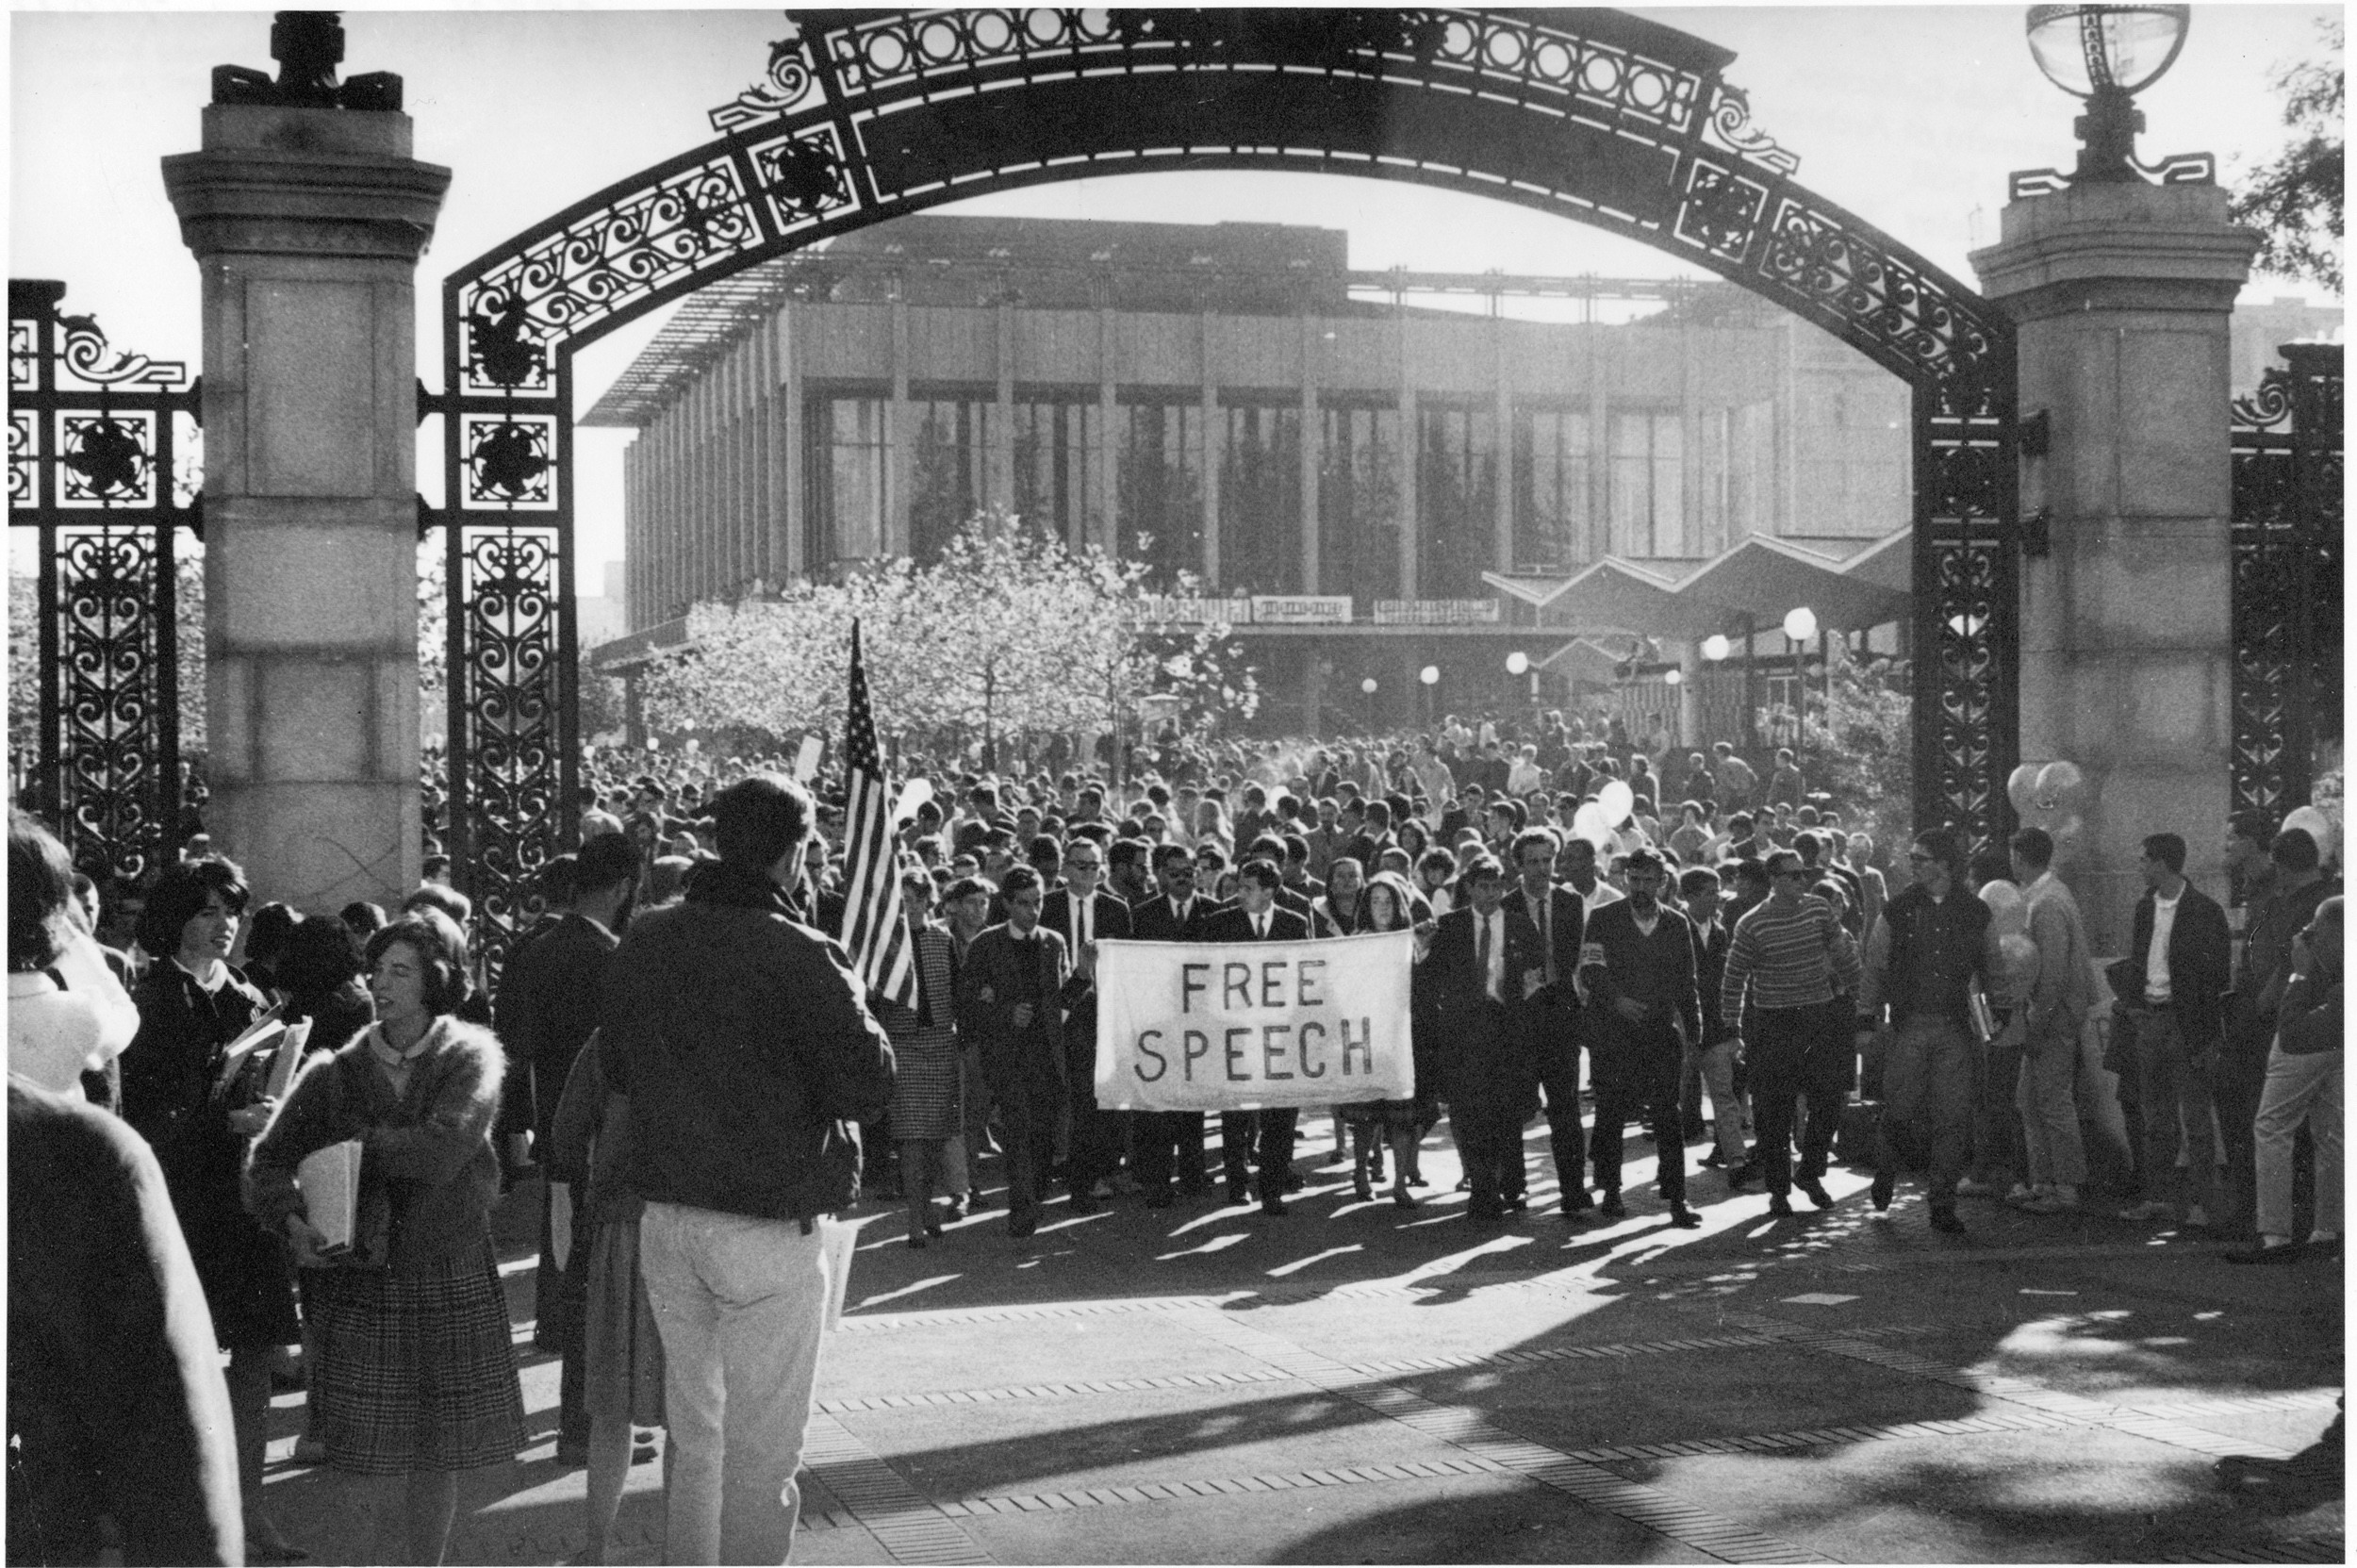  The Free Speech Movement at Berkeley changed U.S. perceptions of collegiate activism.&nbsp; 